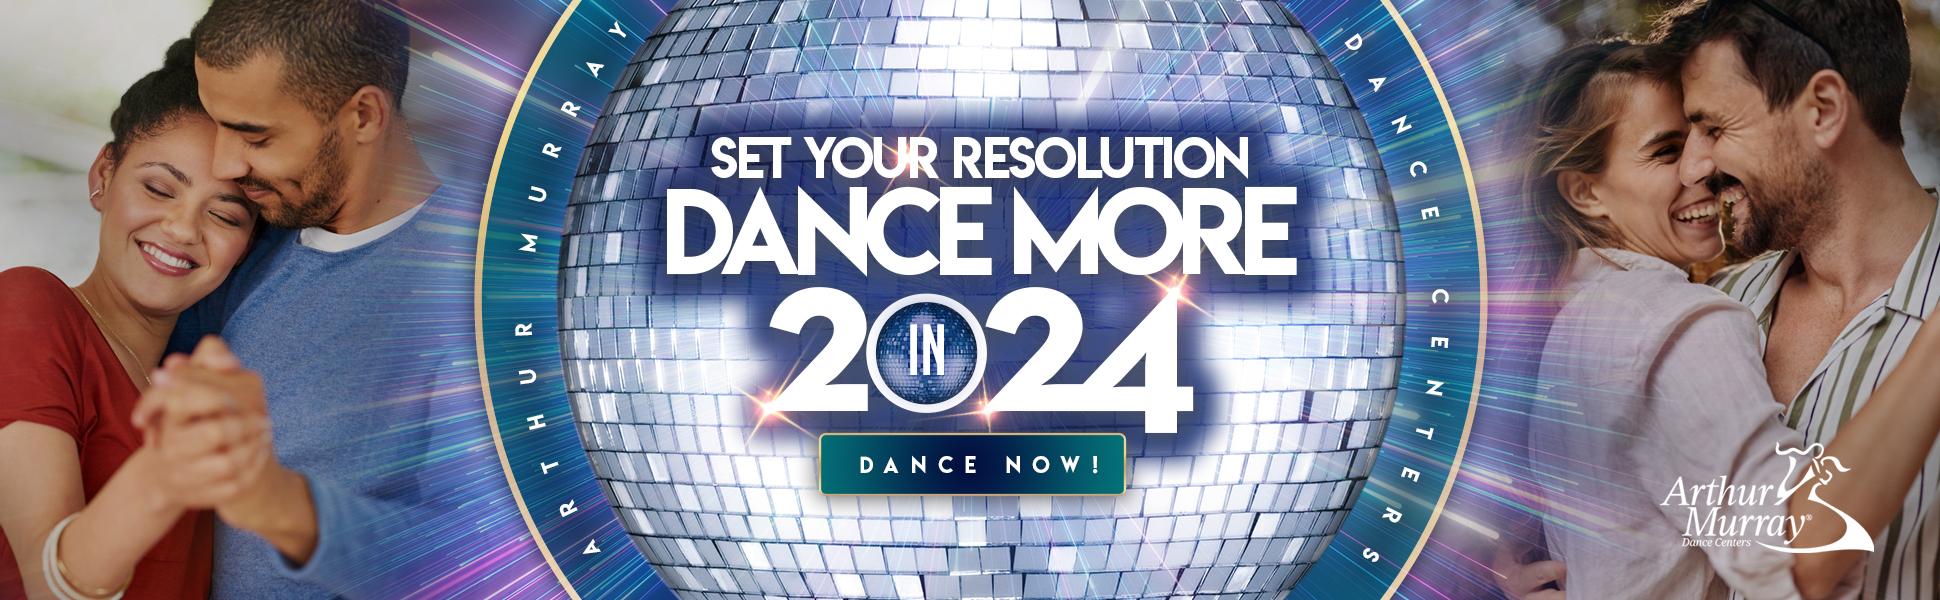 Dance more in 2024